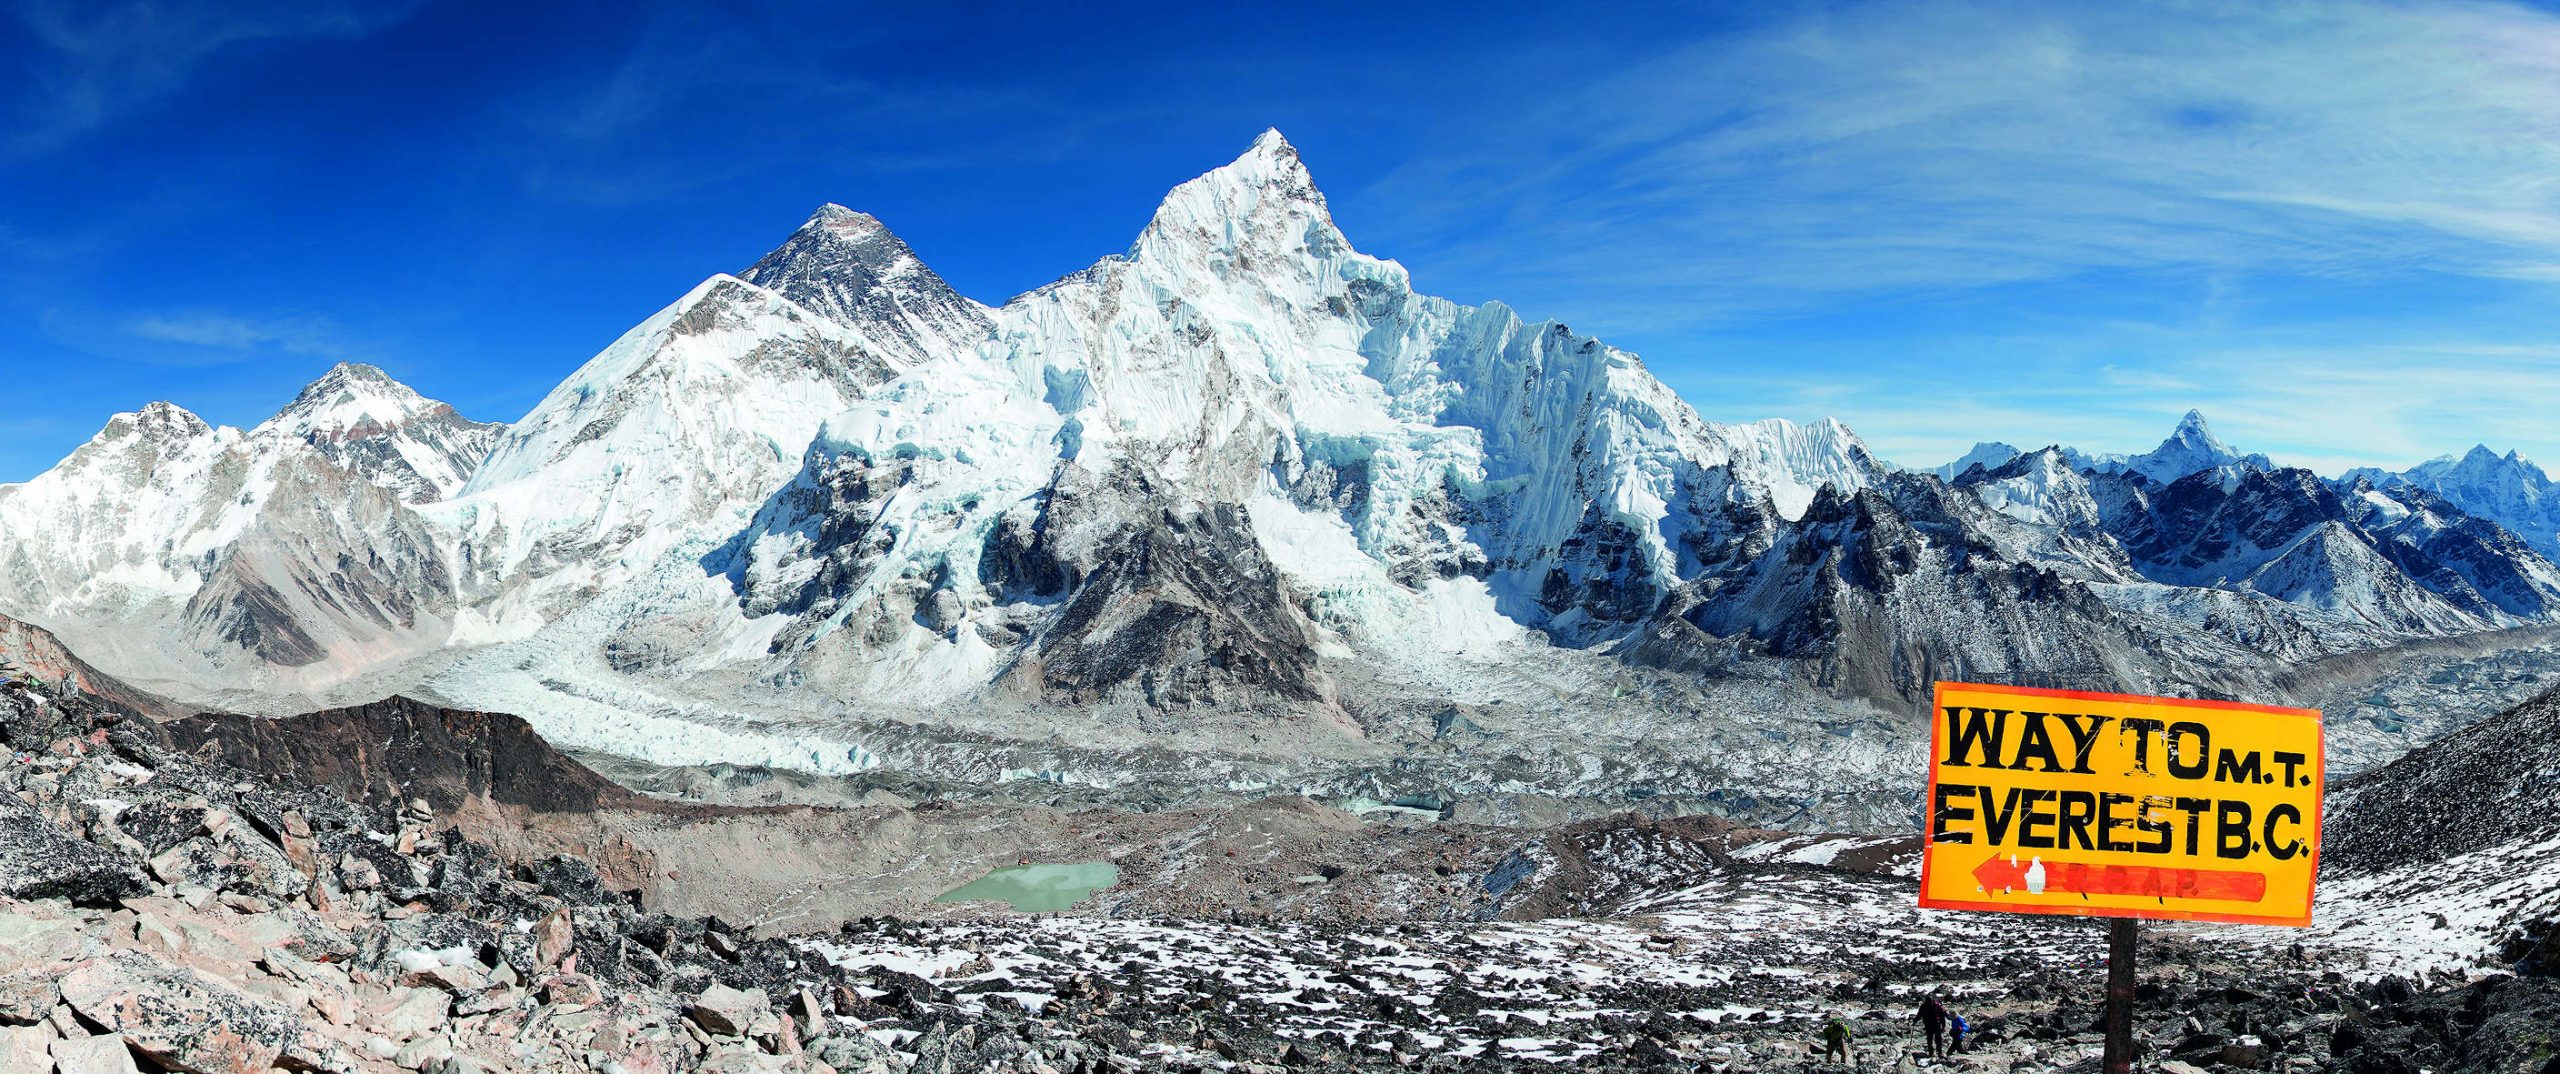 Monte Everest (8849 metri), Himalaya, Cina e Nepal © Shutterstock